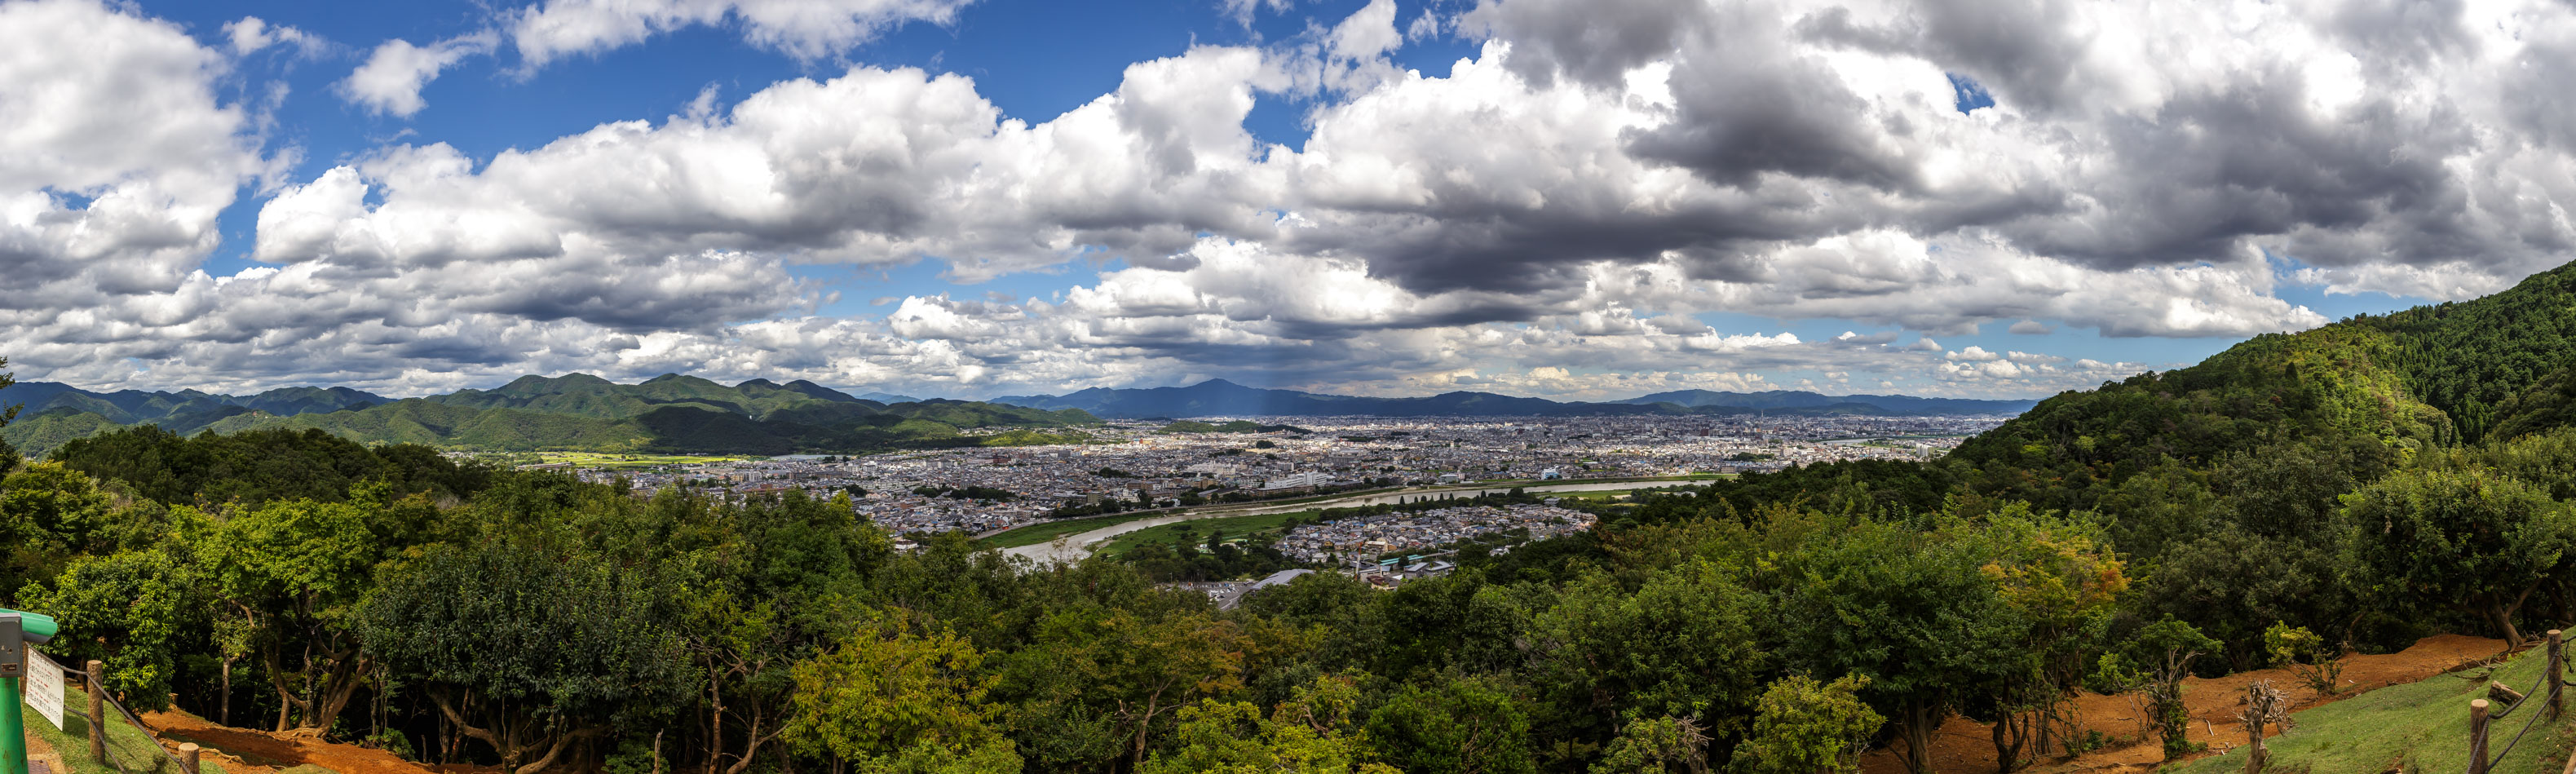 /Guewen/galeries/public/Voyages/Japon/kyoto/vista/Kyoto-vista_009.jpg